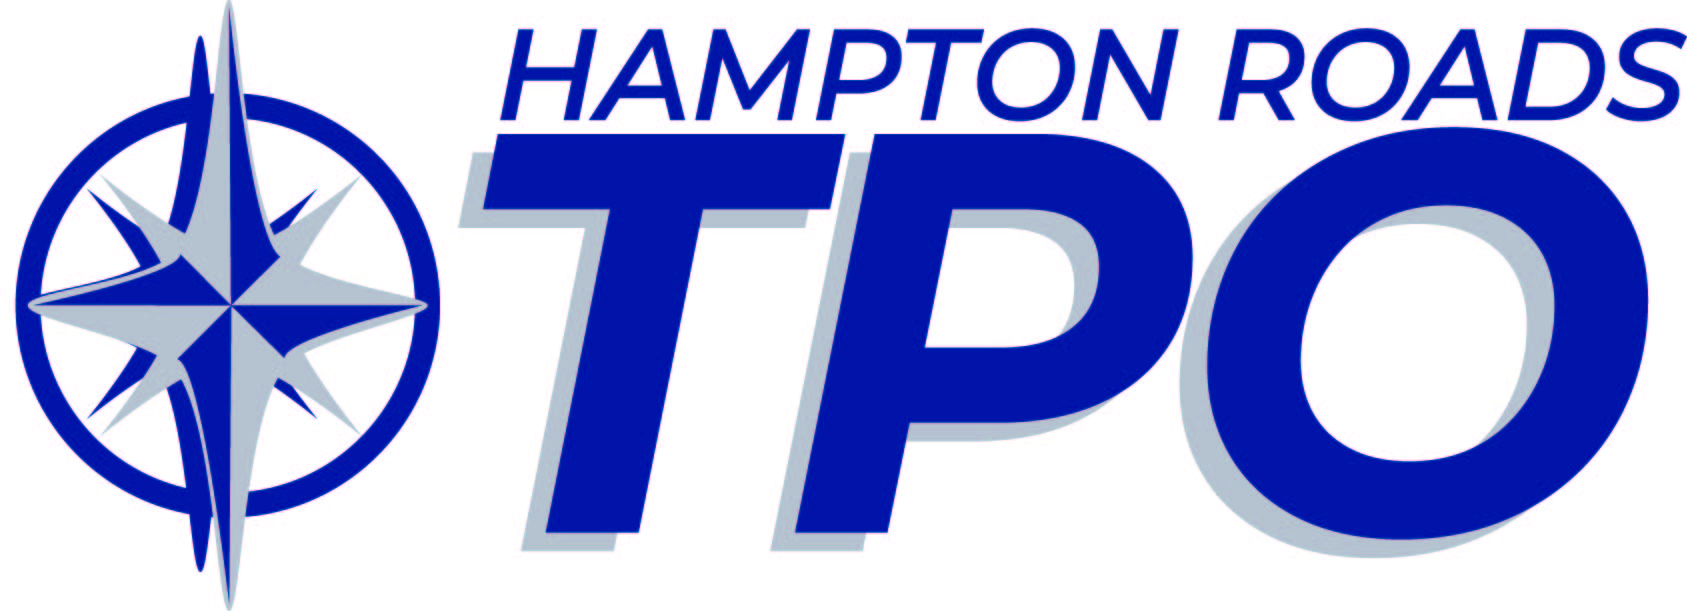 Hampton Roads TPO logo